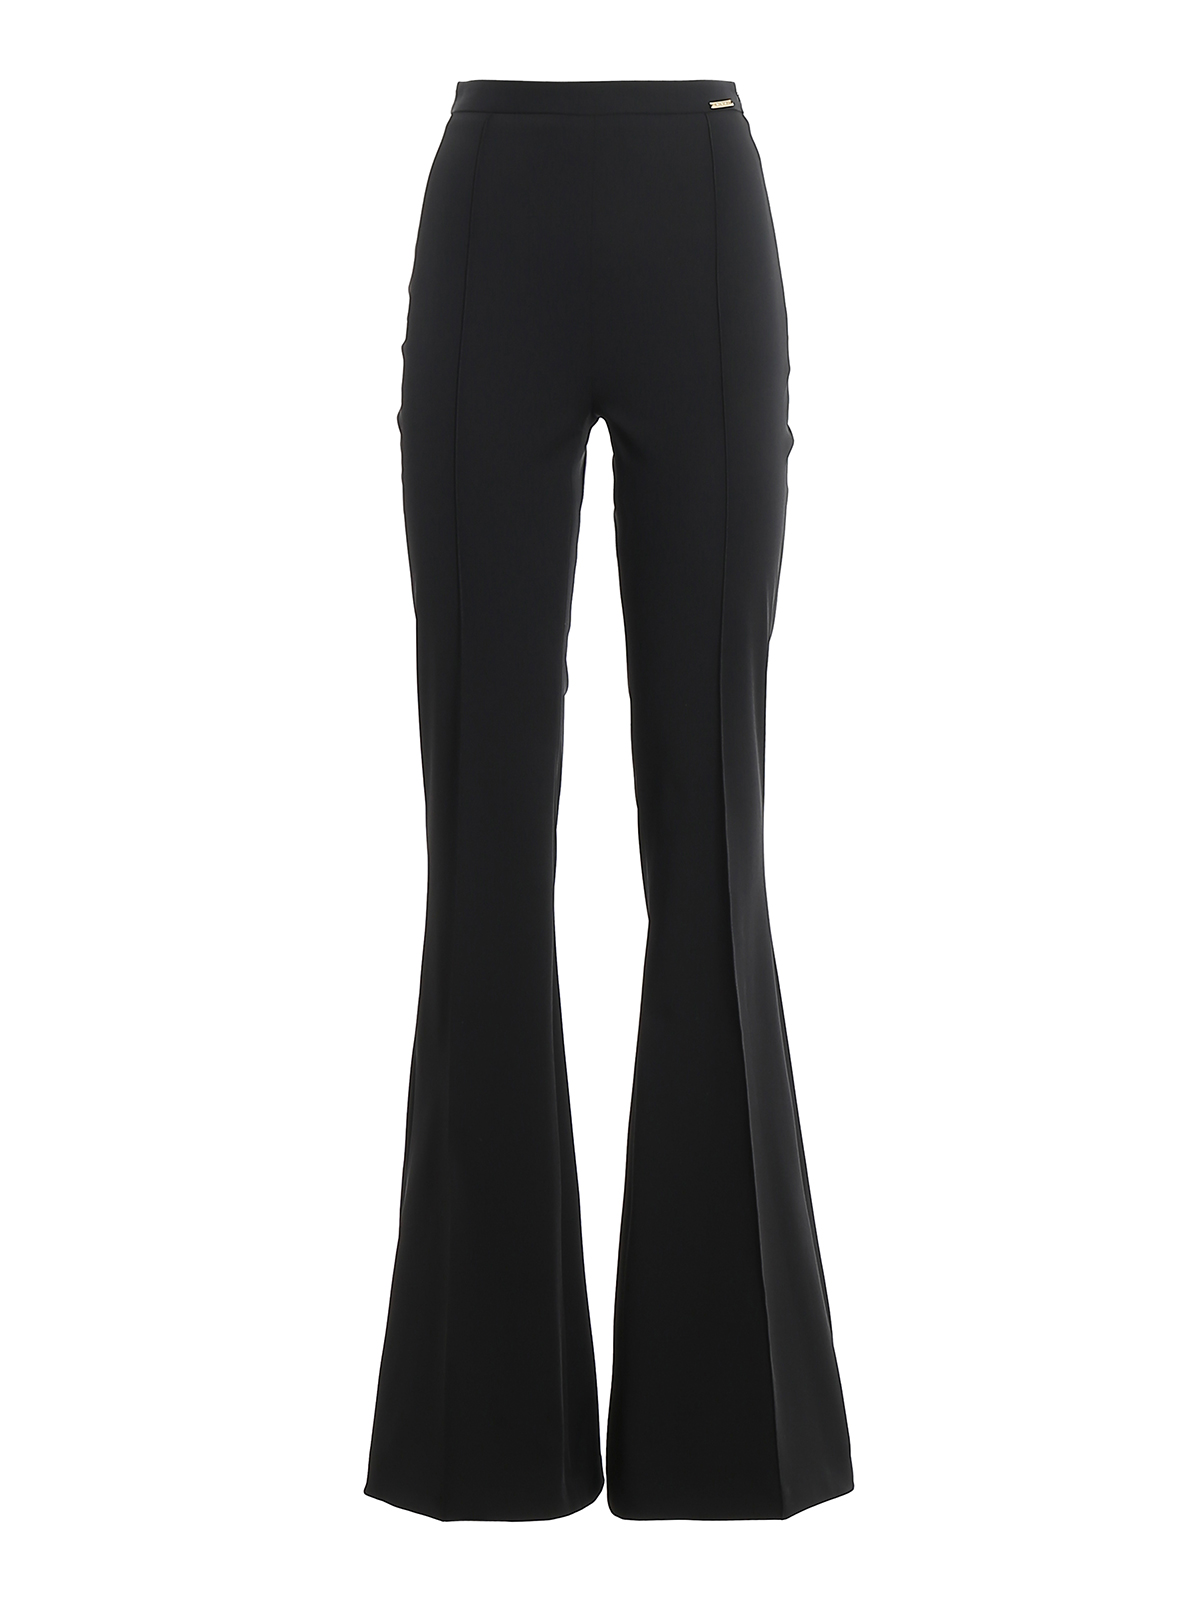 elisabetta-franchi-casual-trousers-black-bell-bottom-trousers -00000182880f00s001.jpg